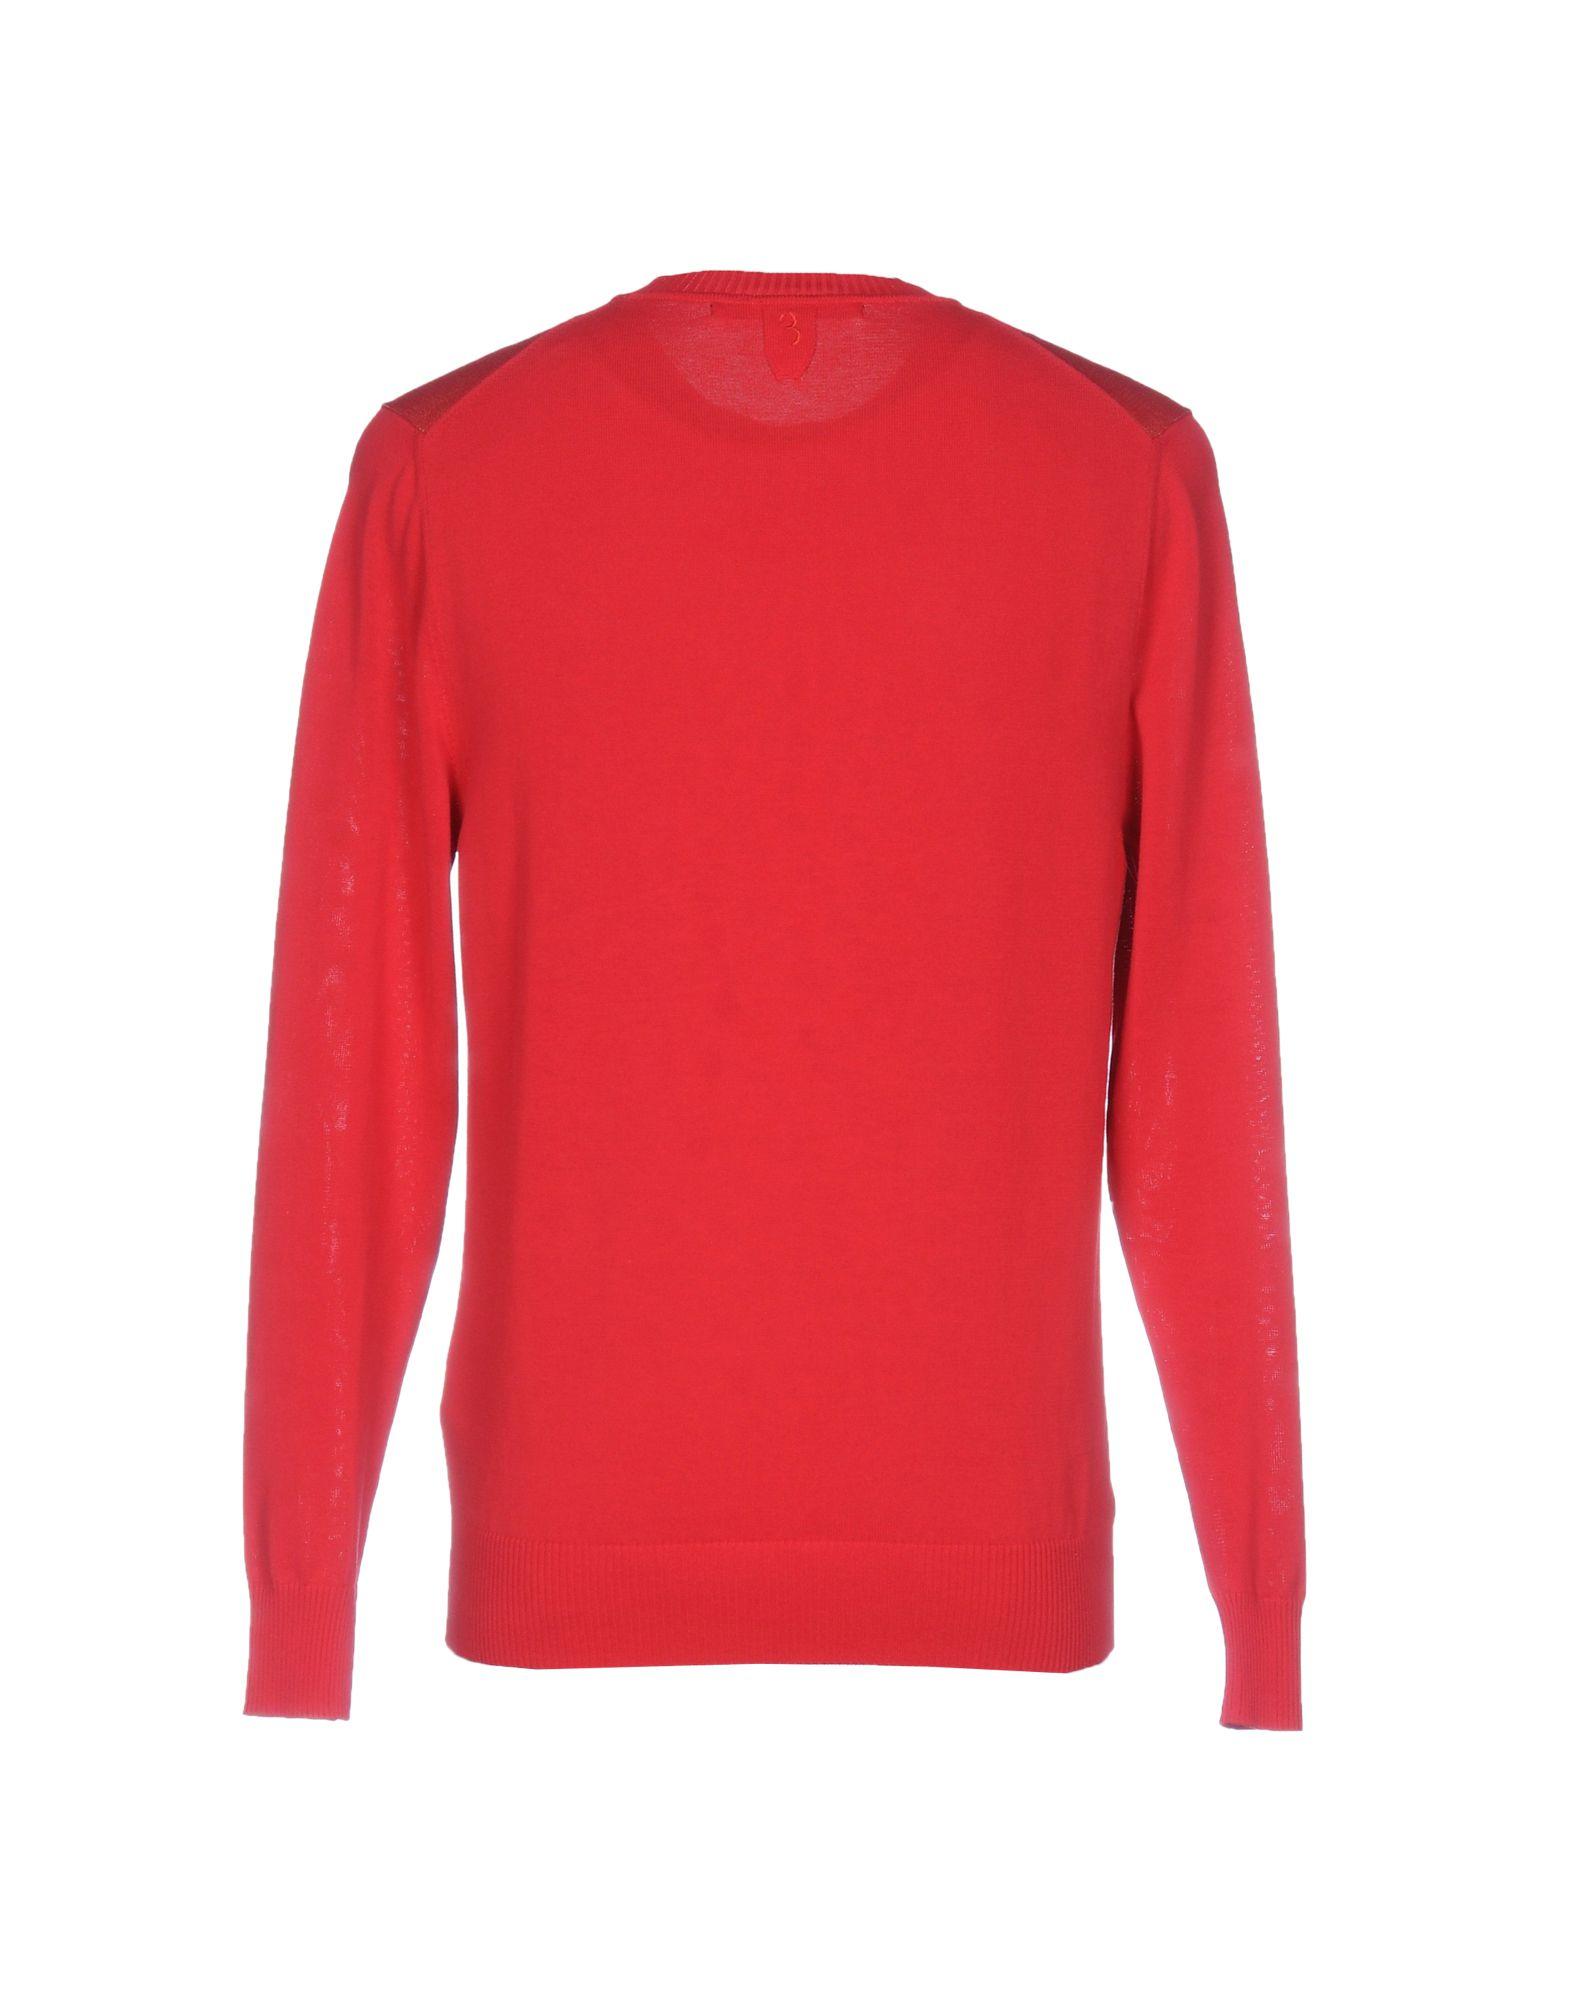 Lyst - Billionaire Sweater in Red for Men